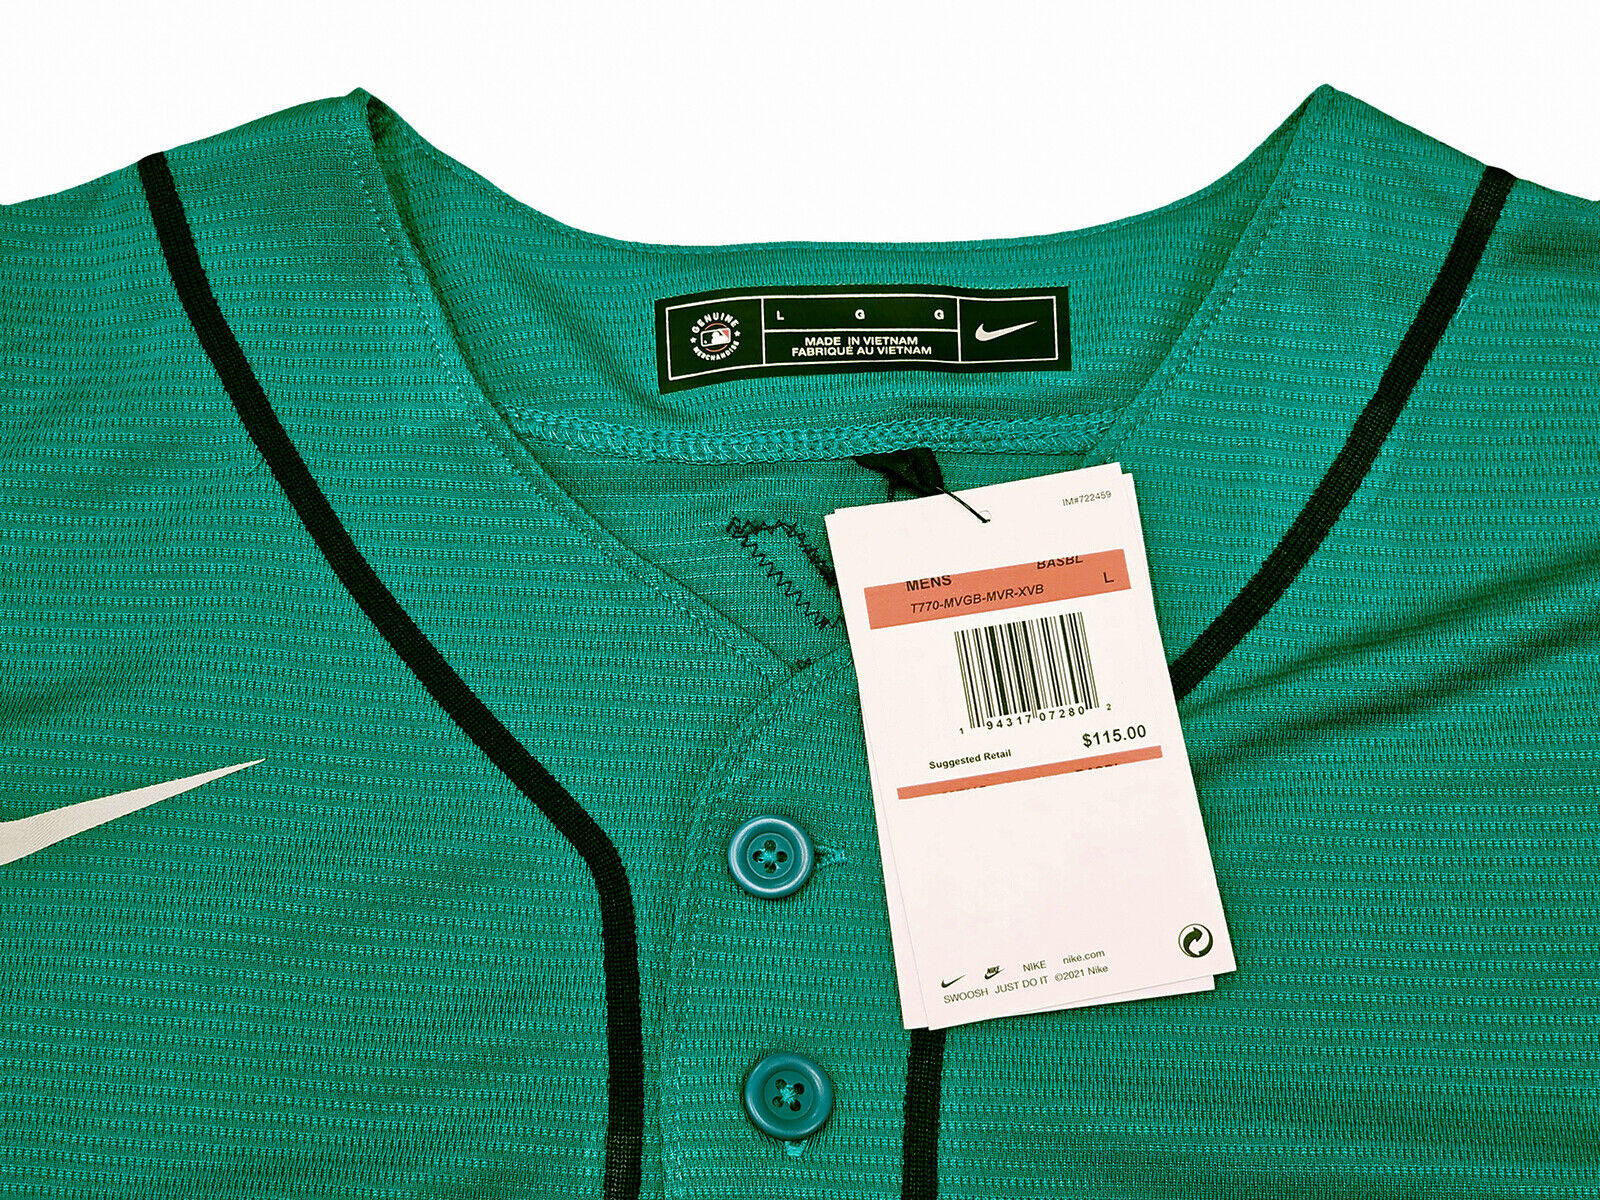 Shop Julio Rodriguez Seattle Mariners Signed Blue Nike Jersey Size XL